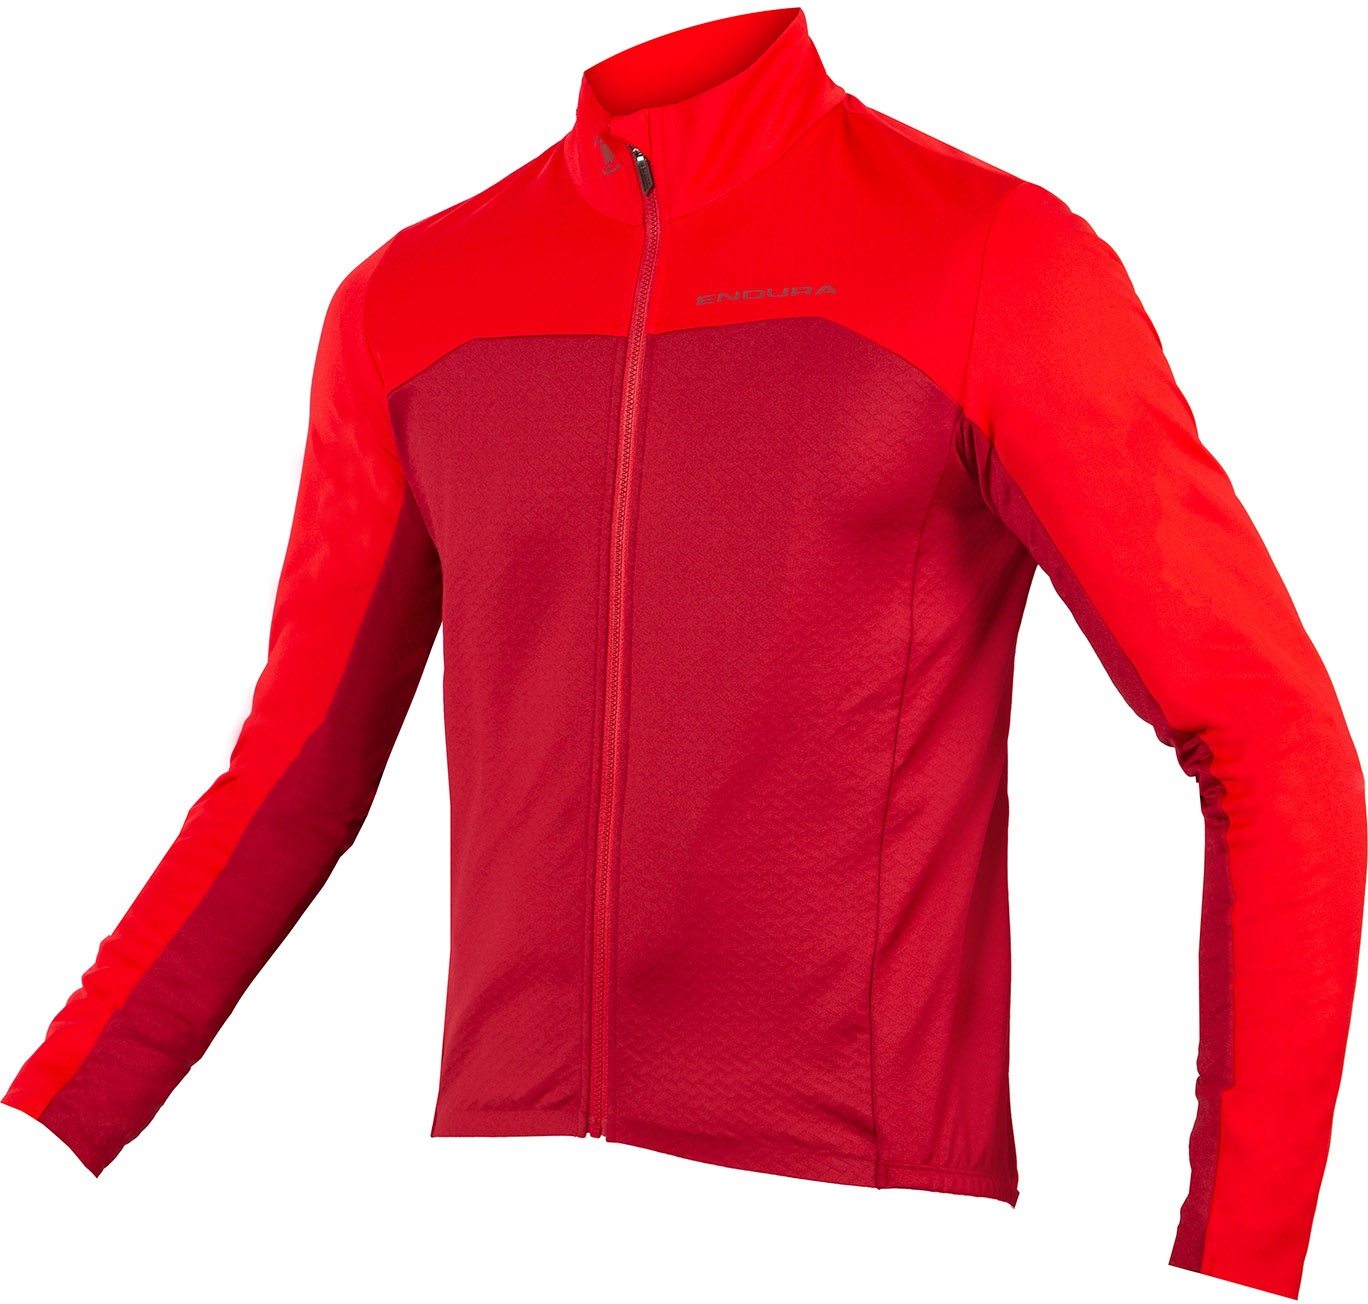 Beklædning - Cykeltrøjer - Endura FS260-Pro Roubaix Jersey - Rød